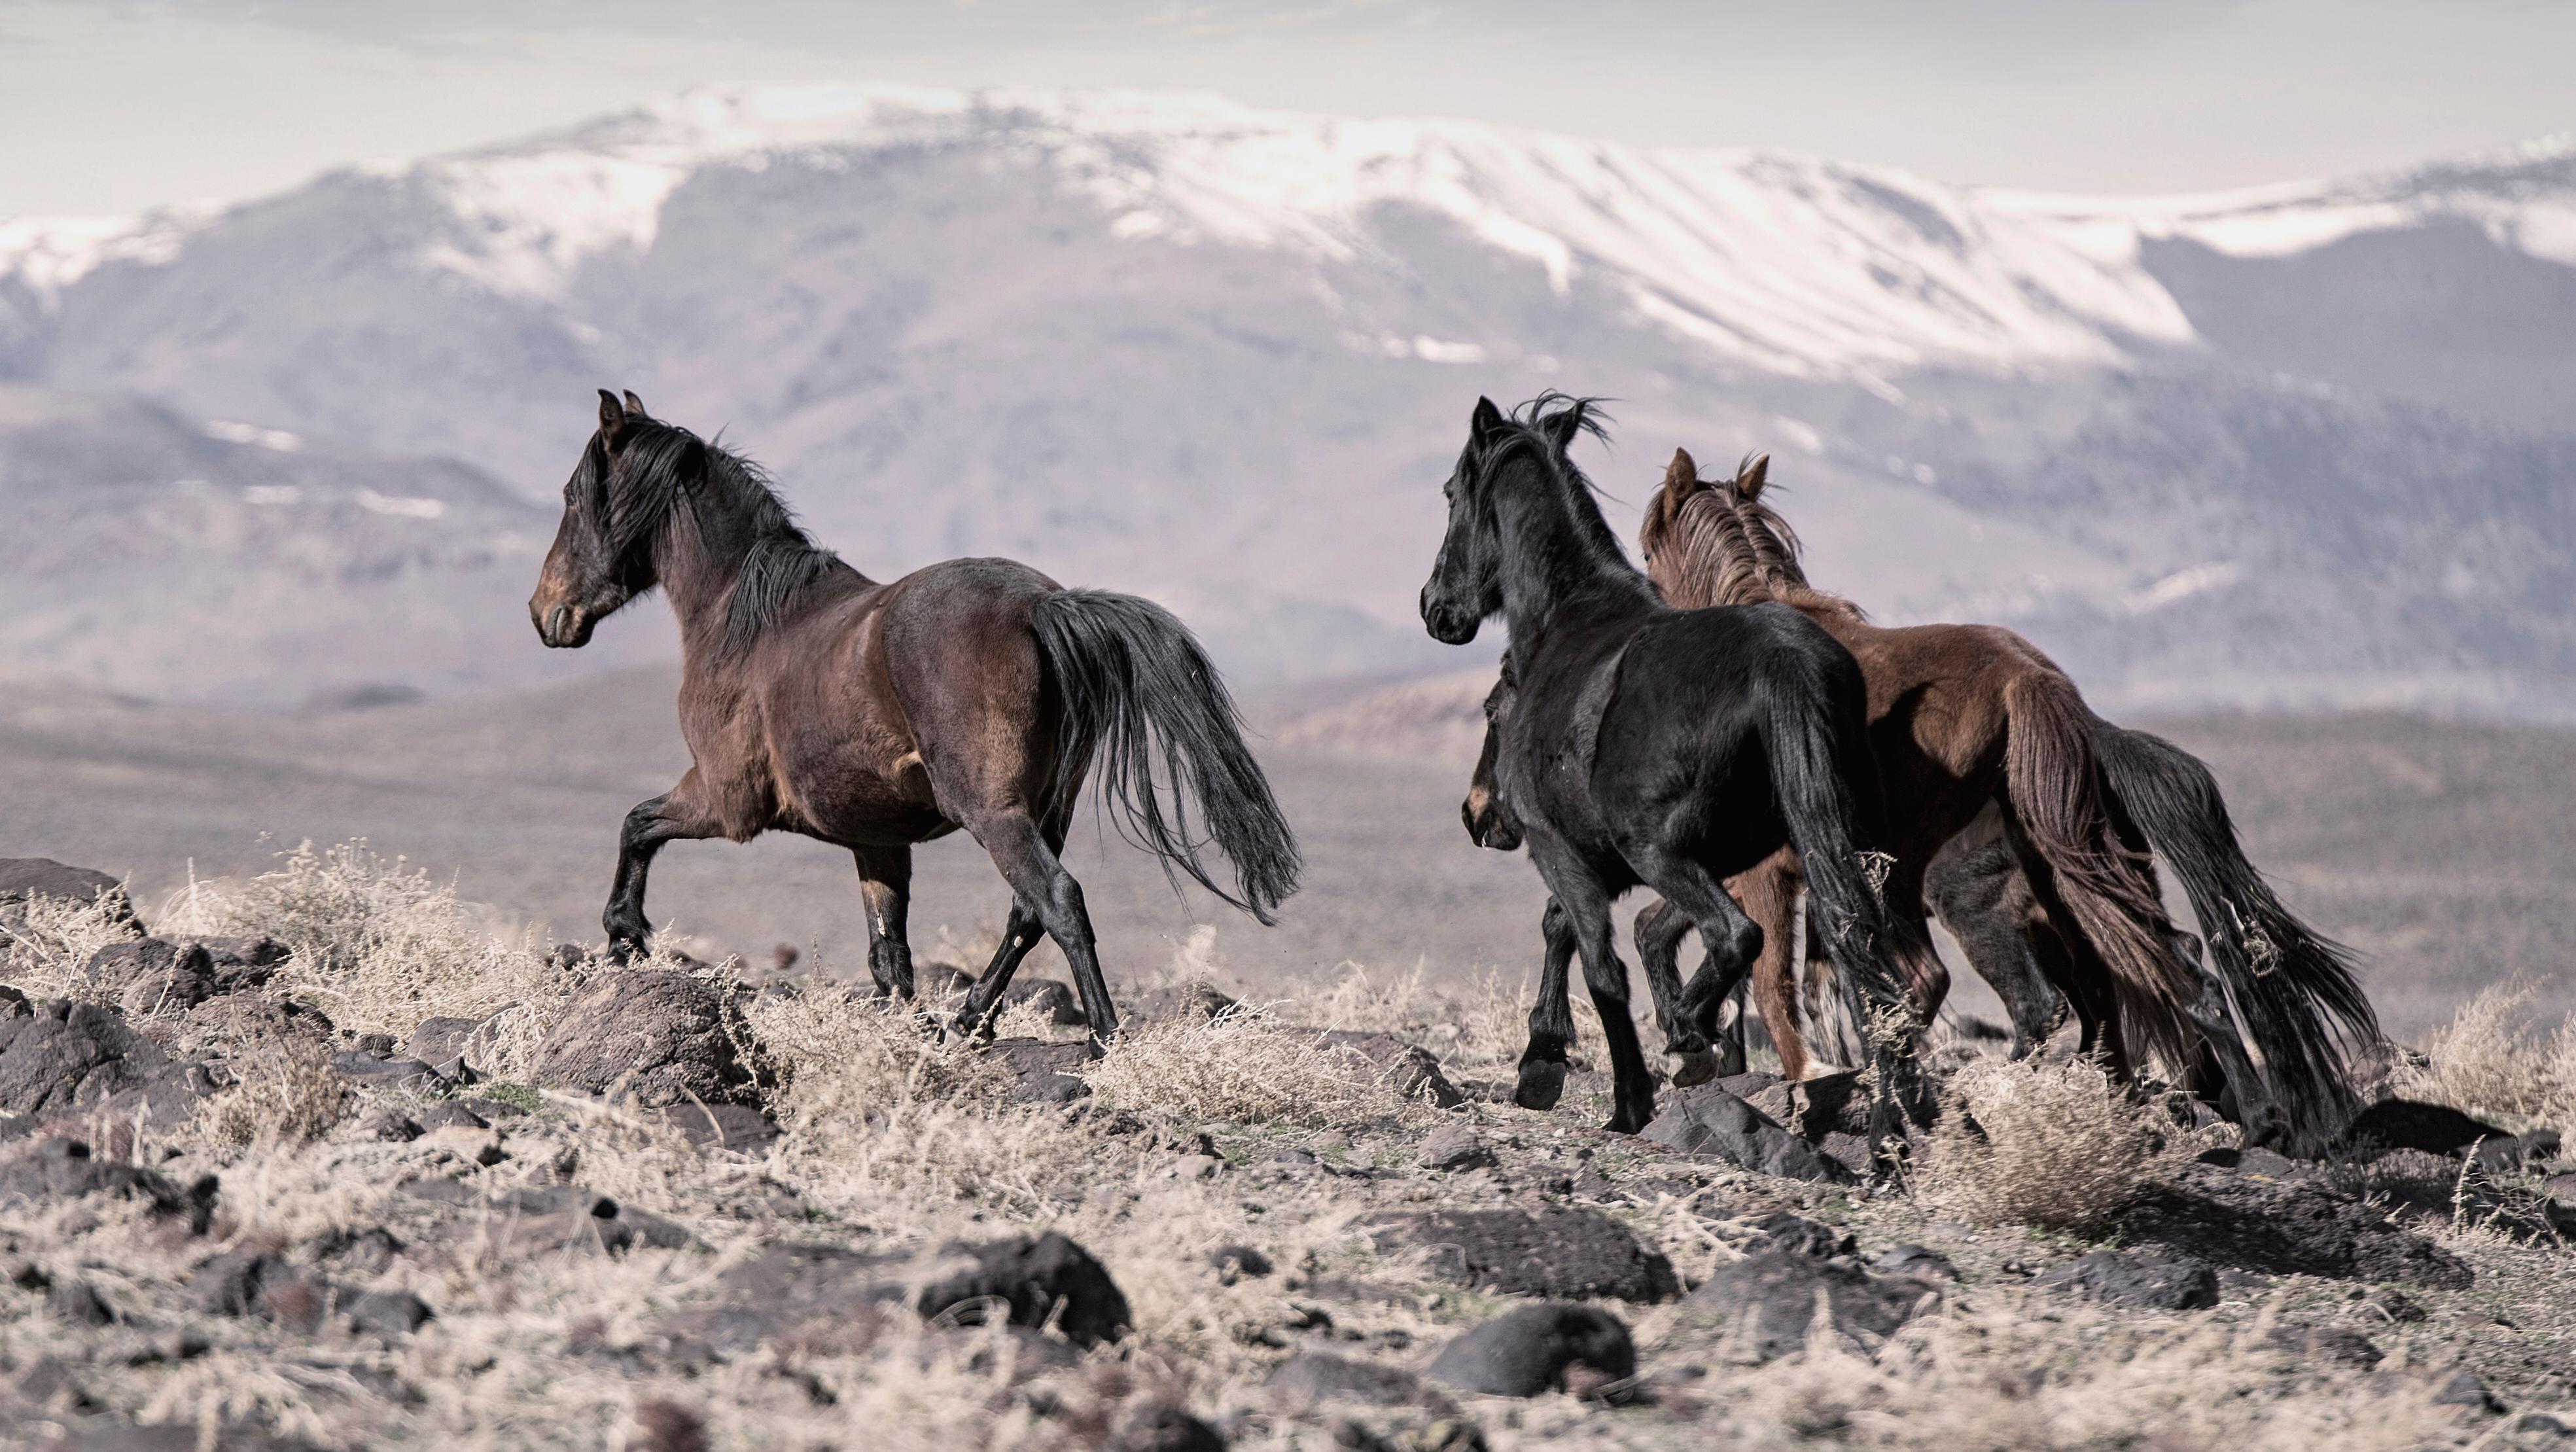 Black and White Photograph Shane Russeck - « On the Go », 40x55, photographie de chevaux sauvages, moutons, photographie d'art